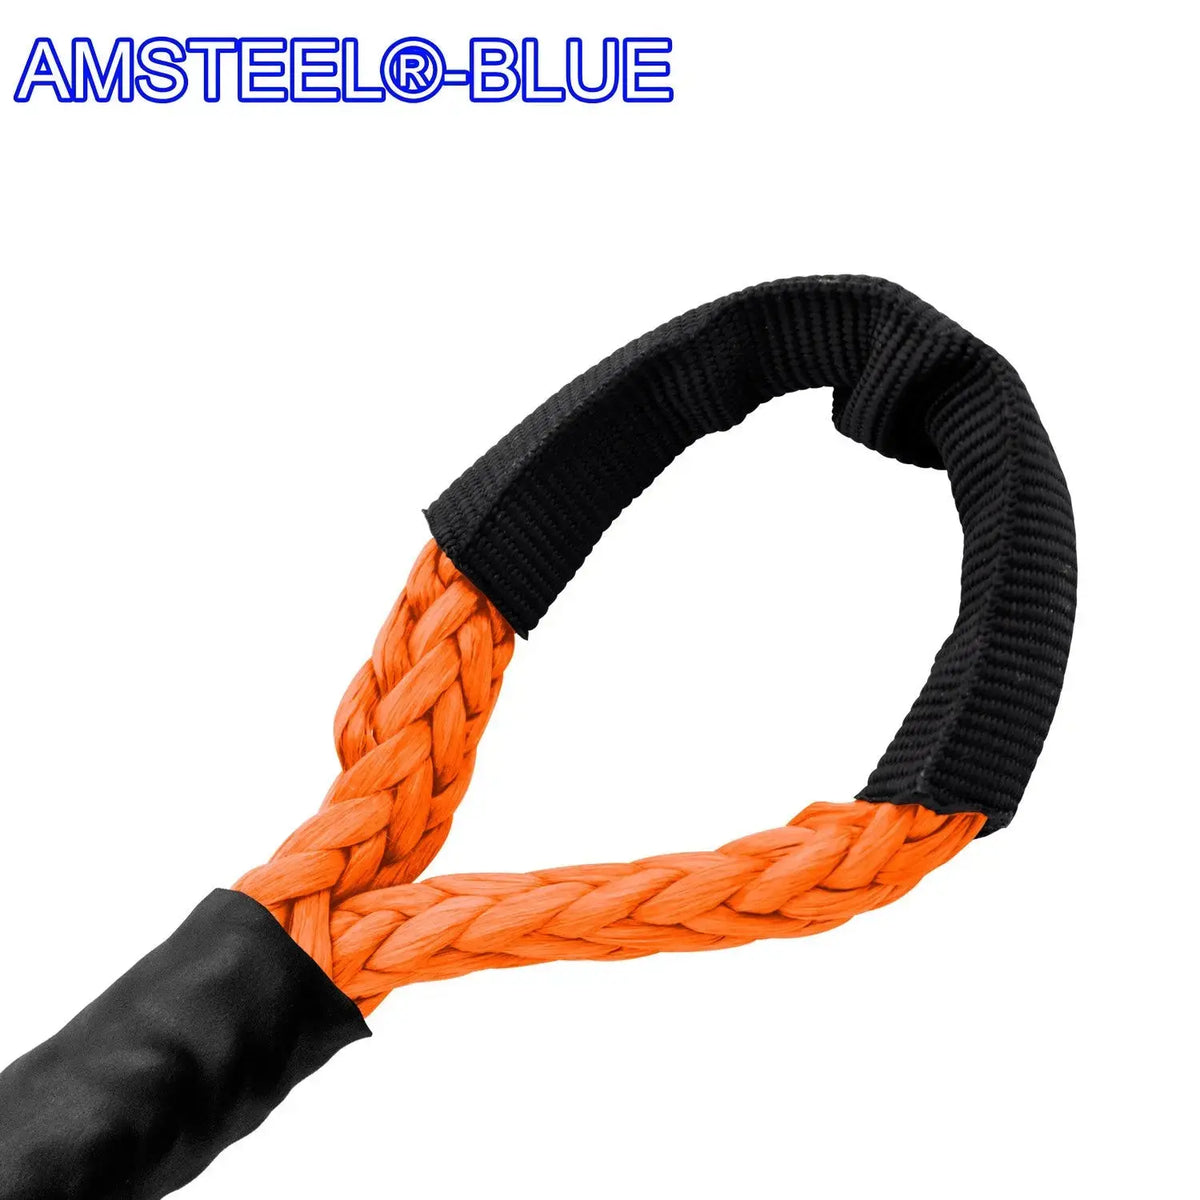 3/16 X 50' Main Line Winch Rope - AmSteel Blue - Custom Splice